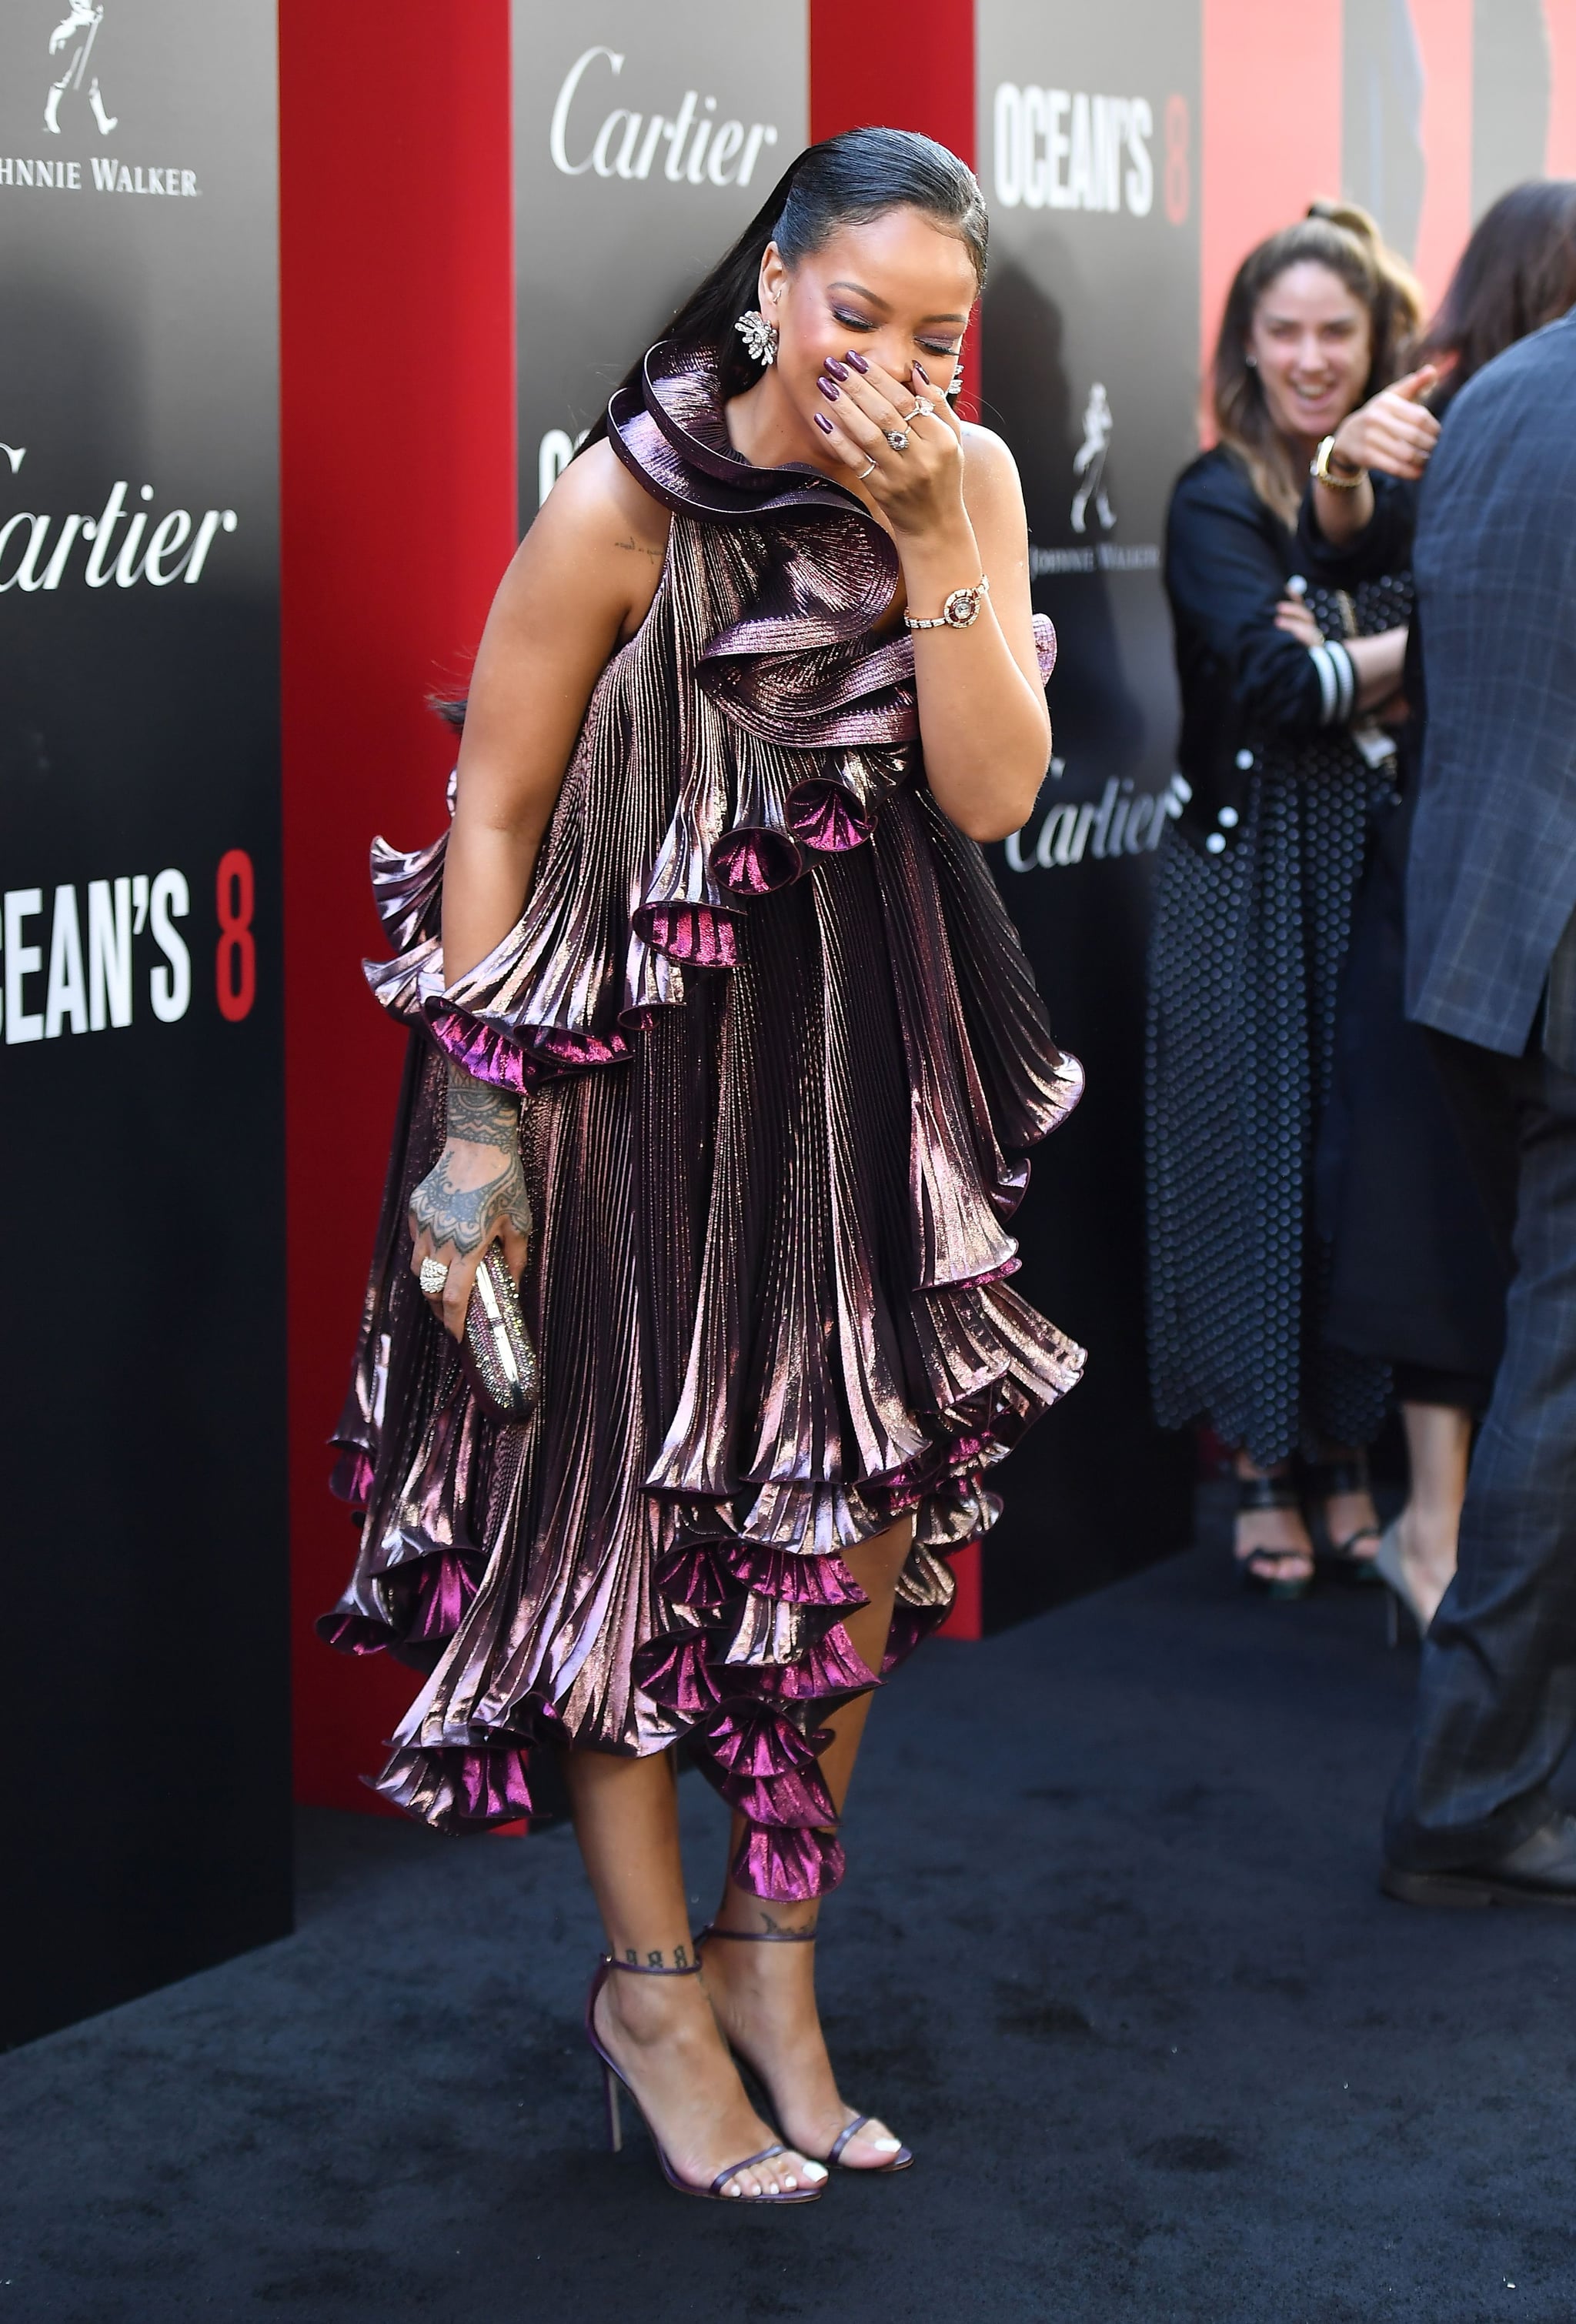 Rihanna's 8 Premiere Dress | POPSUGAR Fashion